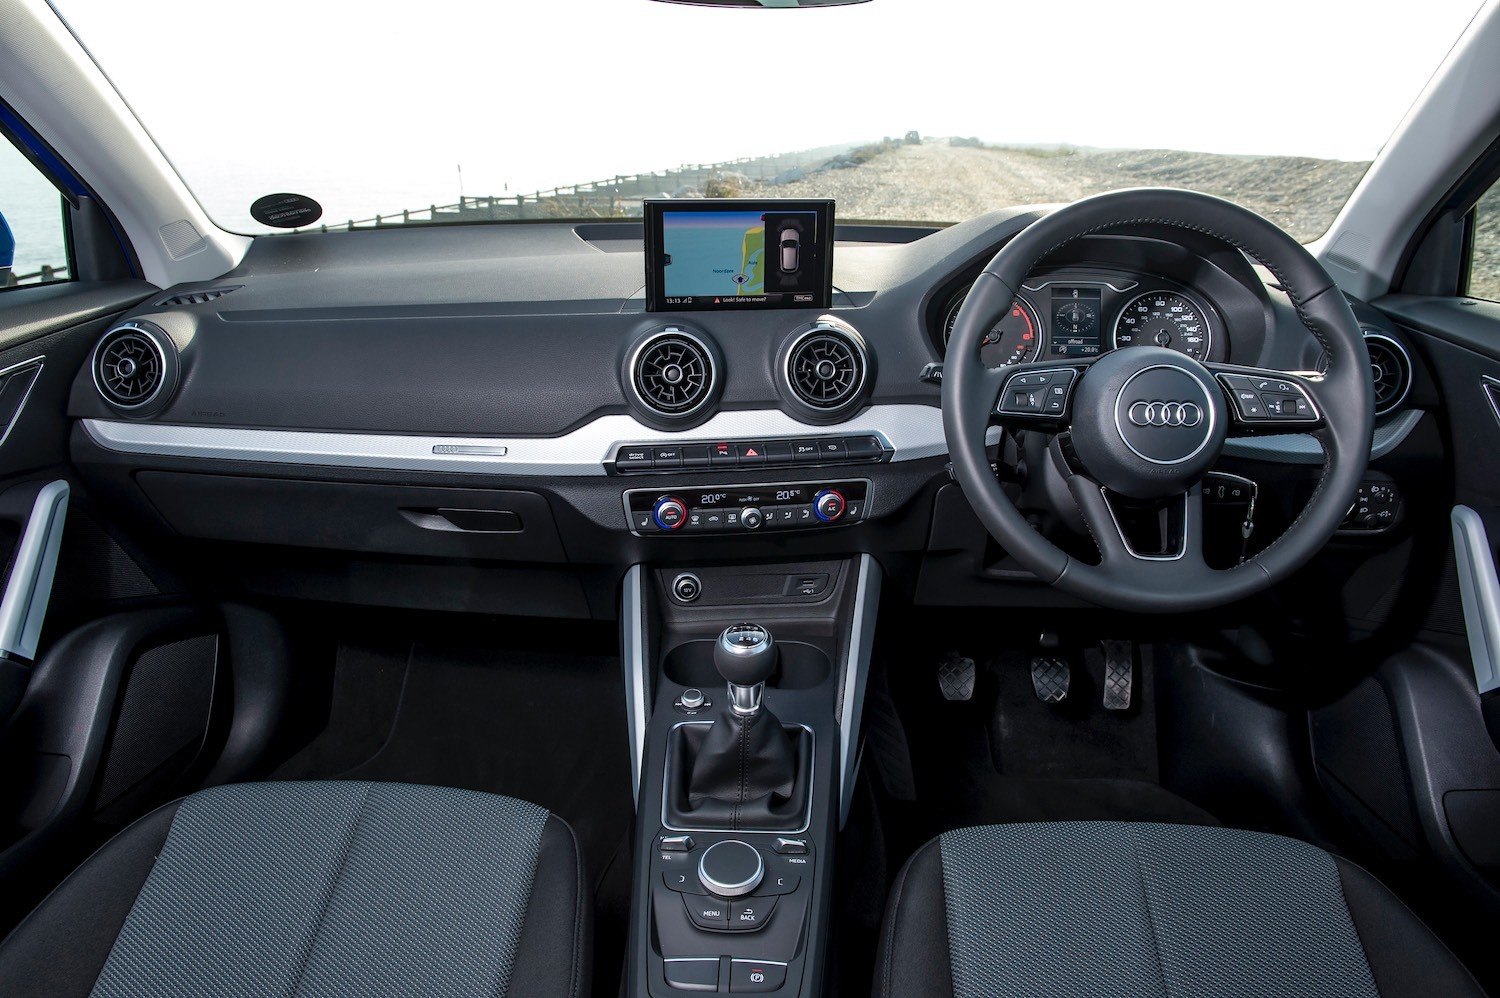 Neil Lyndon reviews the Audi Q2 Quattro SUV for Drive 2